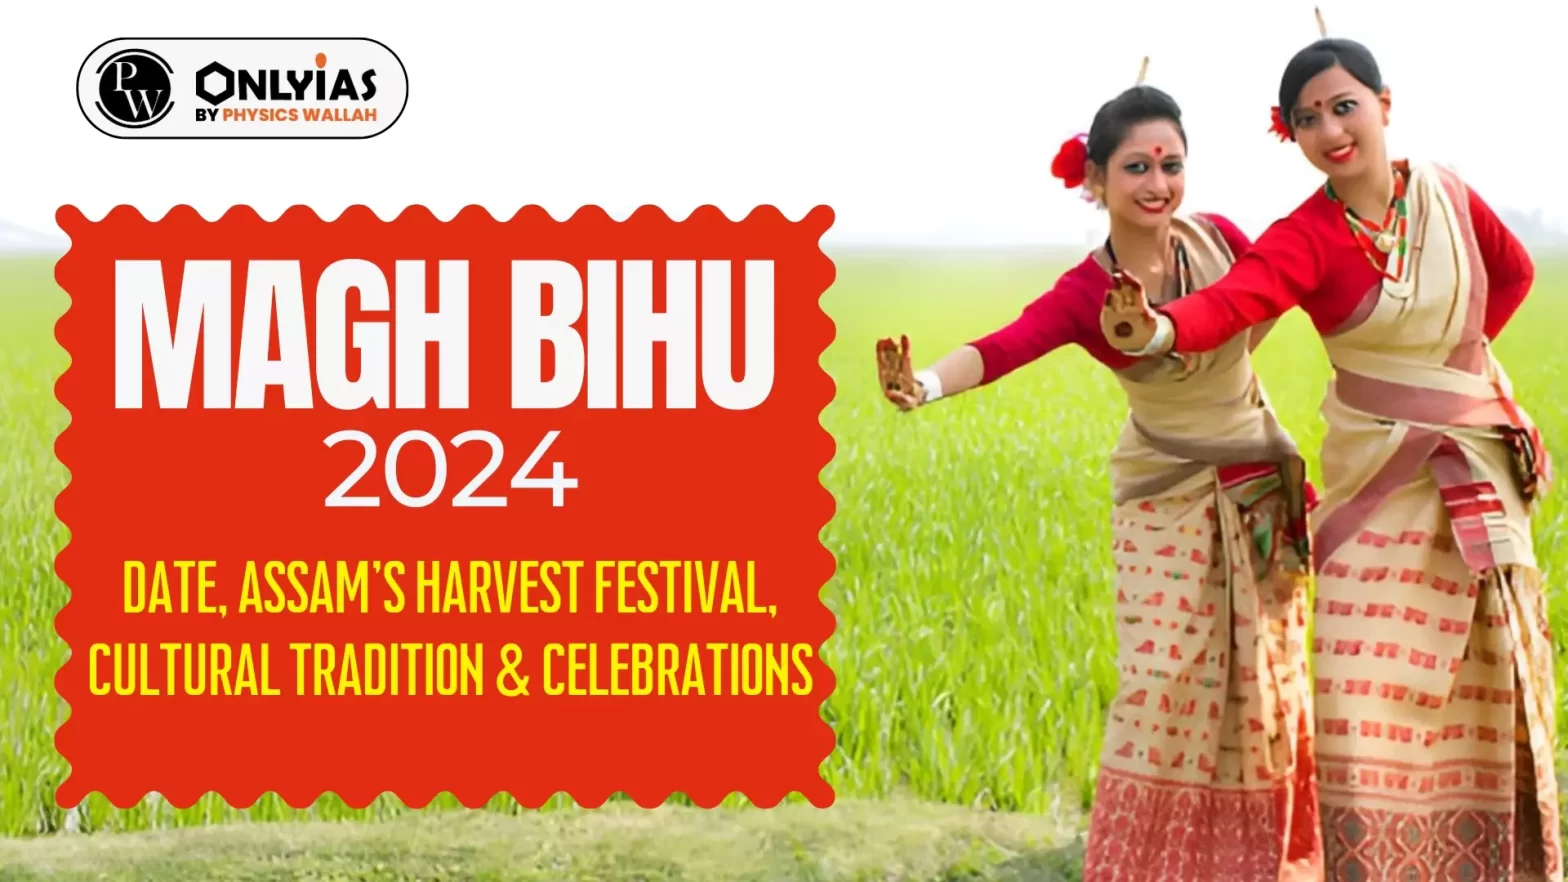 Magh Bihu 2024: Date, Assam’s Harvest Festival, Cultural Tradition & Celebrations